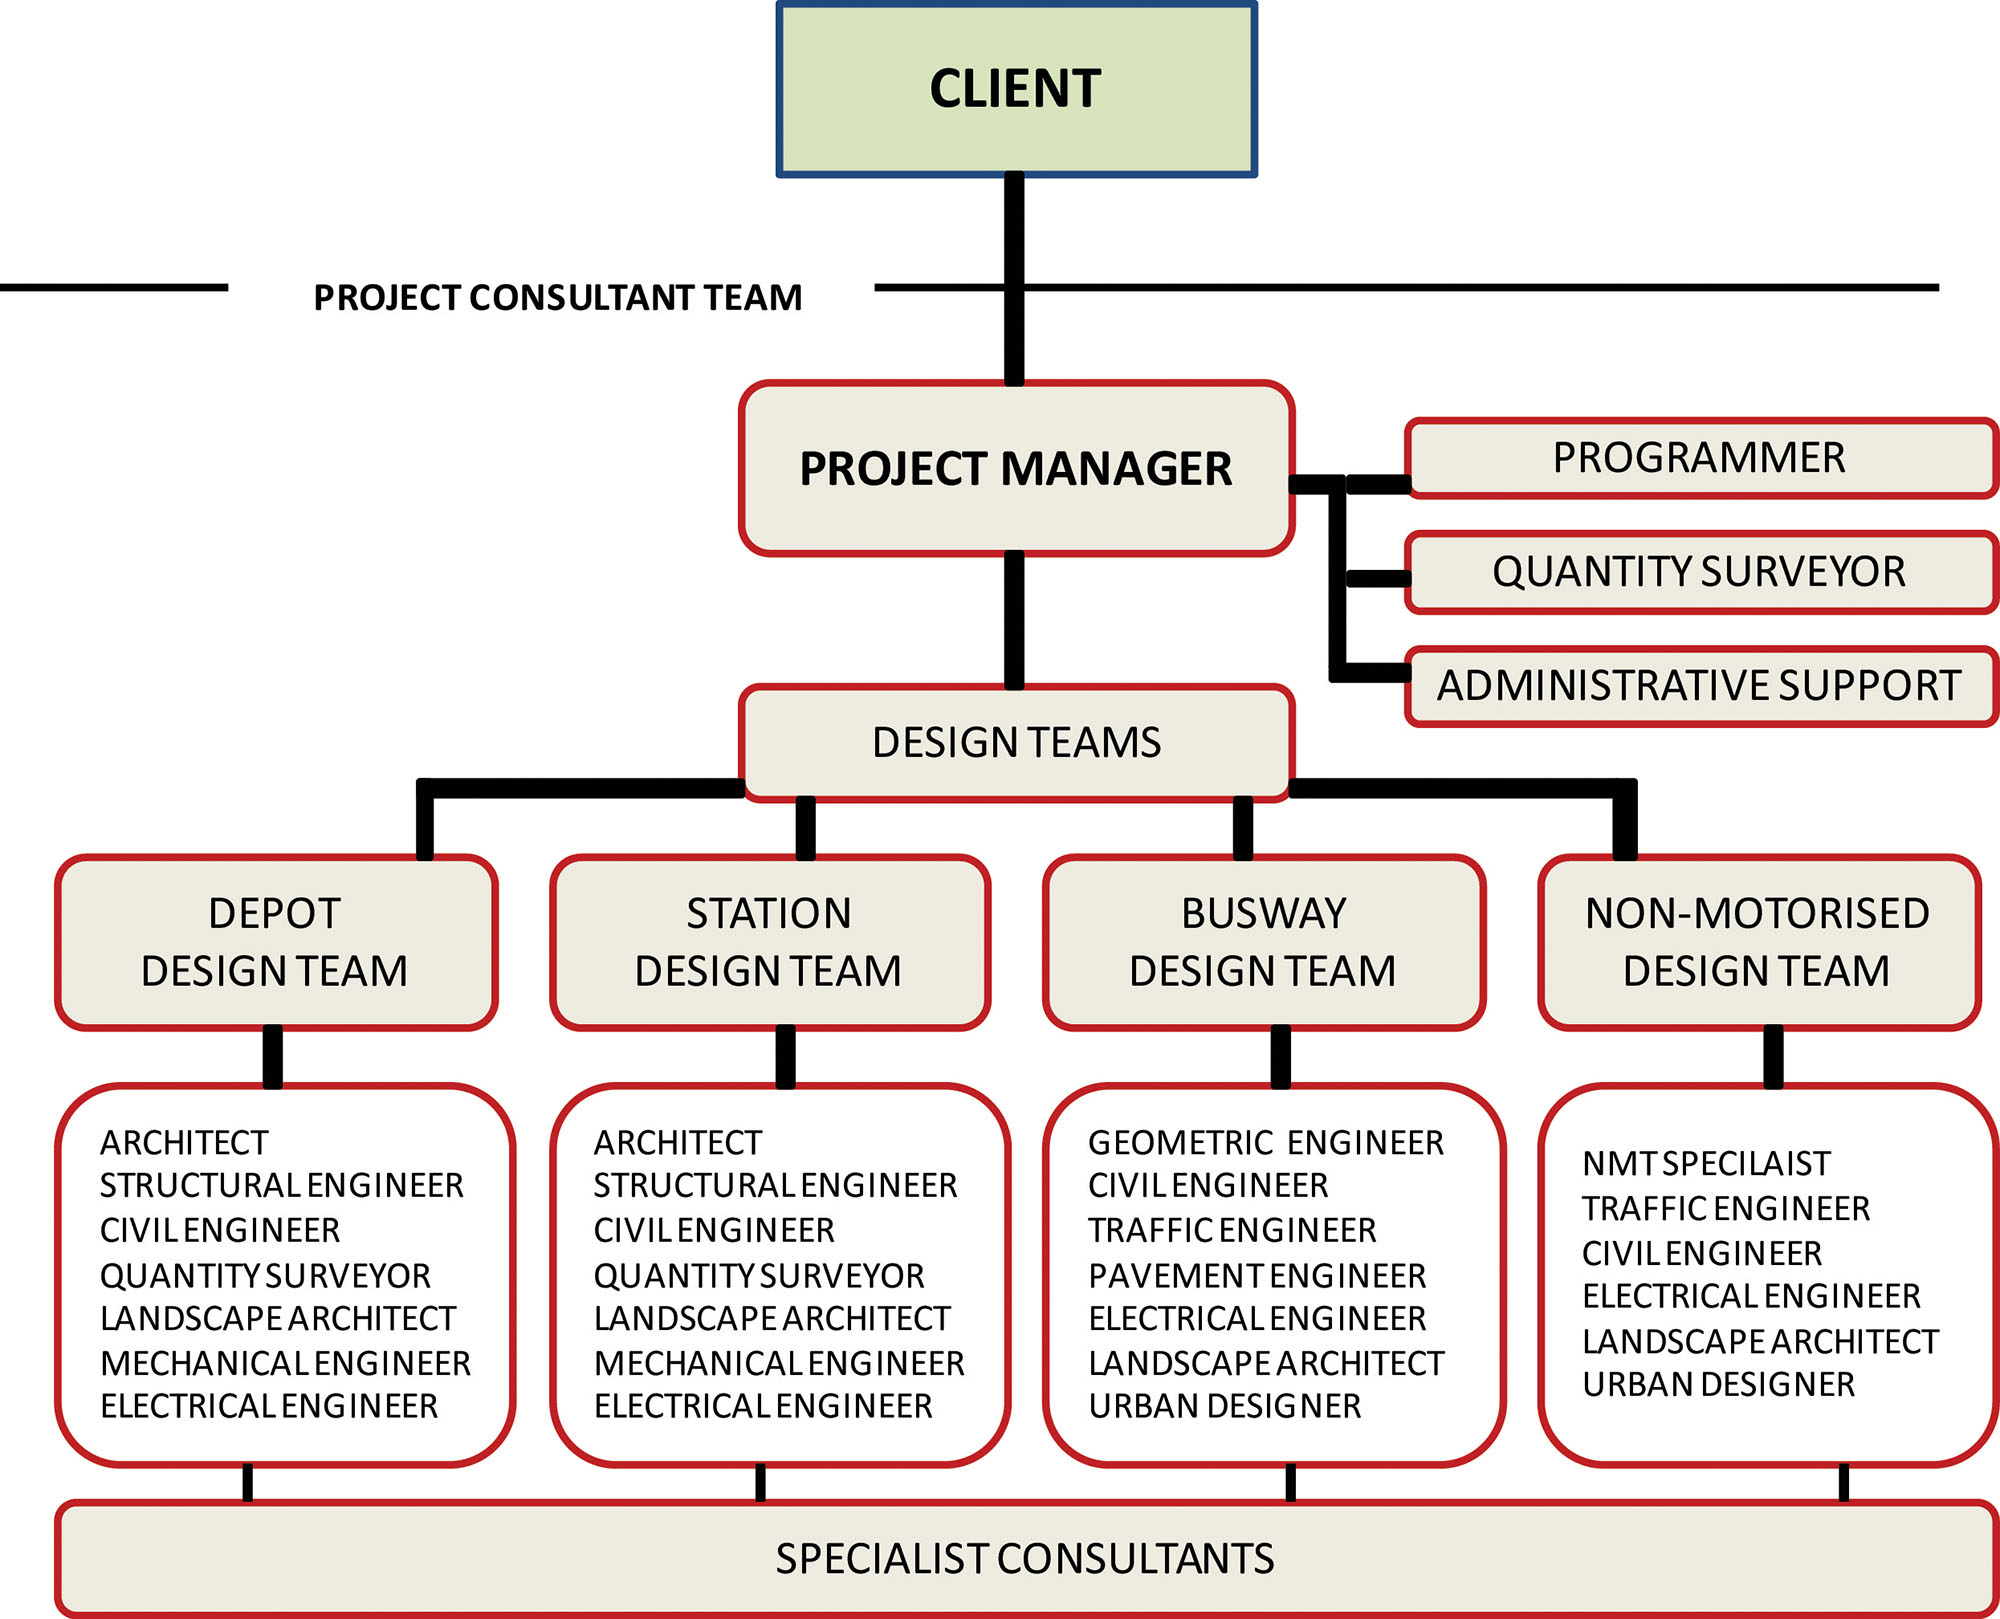 Fig. 21.10 Sample organogram of a professional design team.